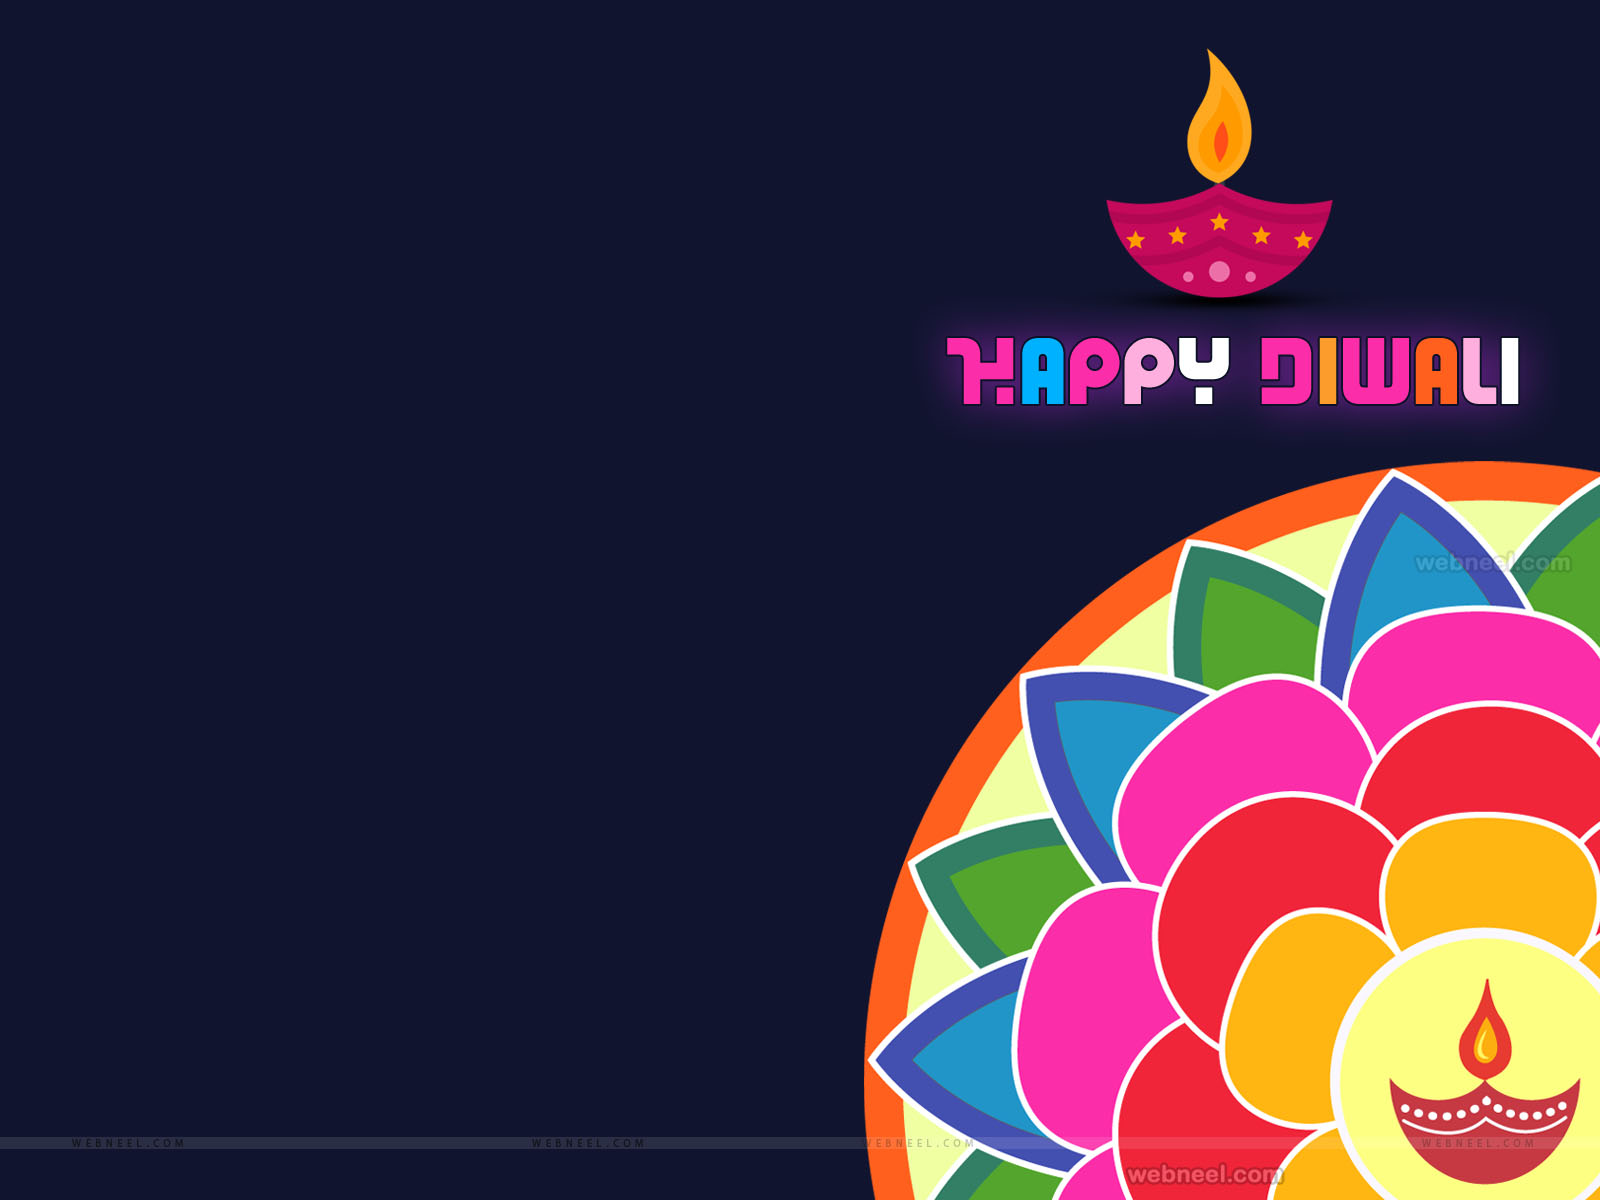 colorful diwali wallpaper design by webneel